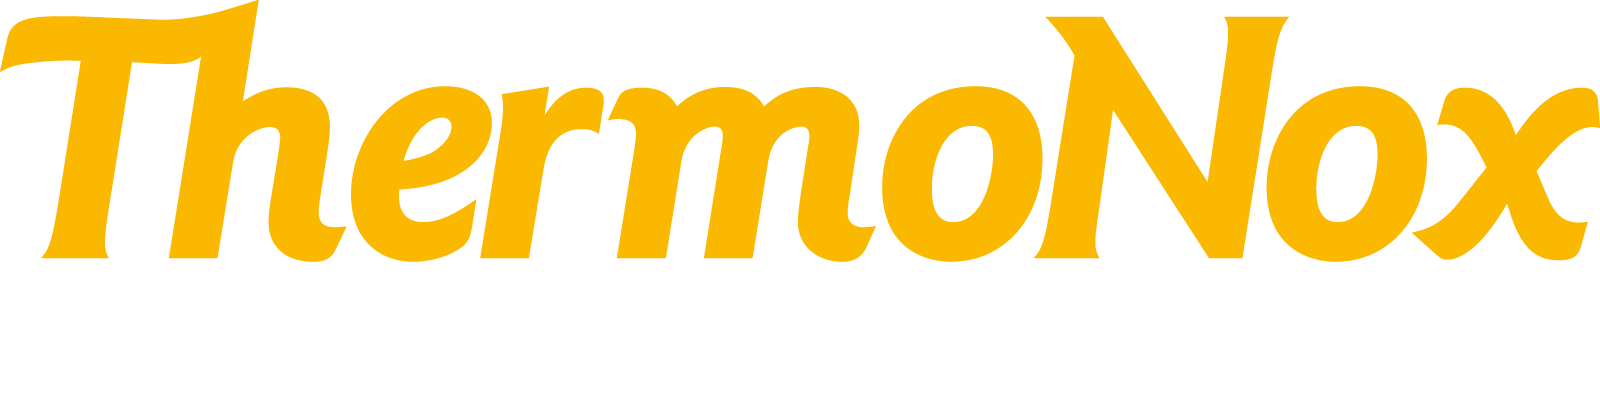 Thermonox Logo